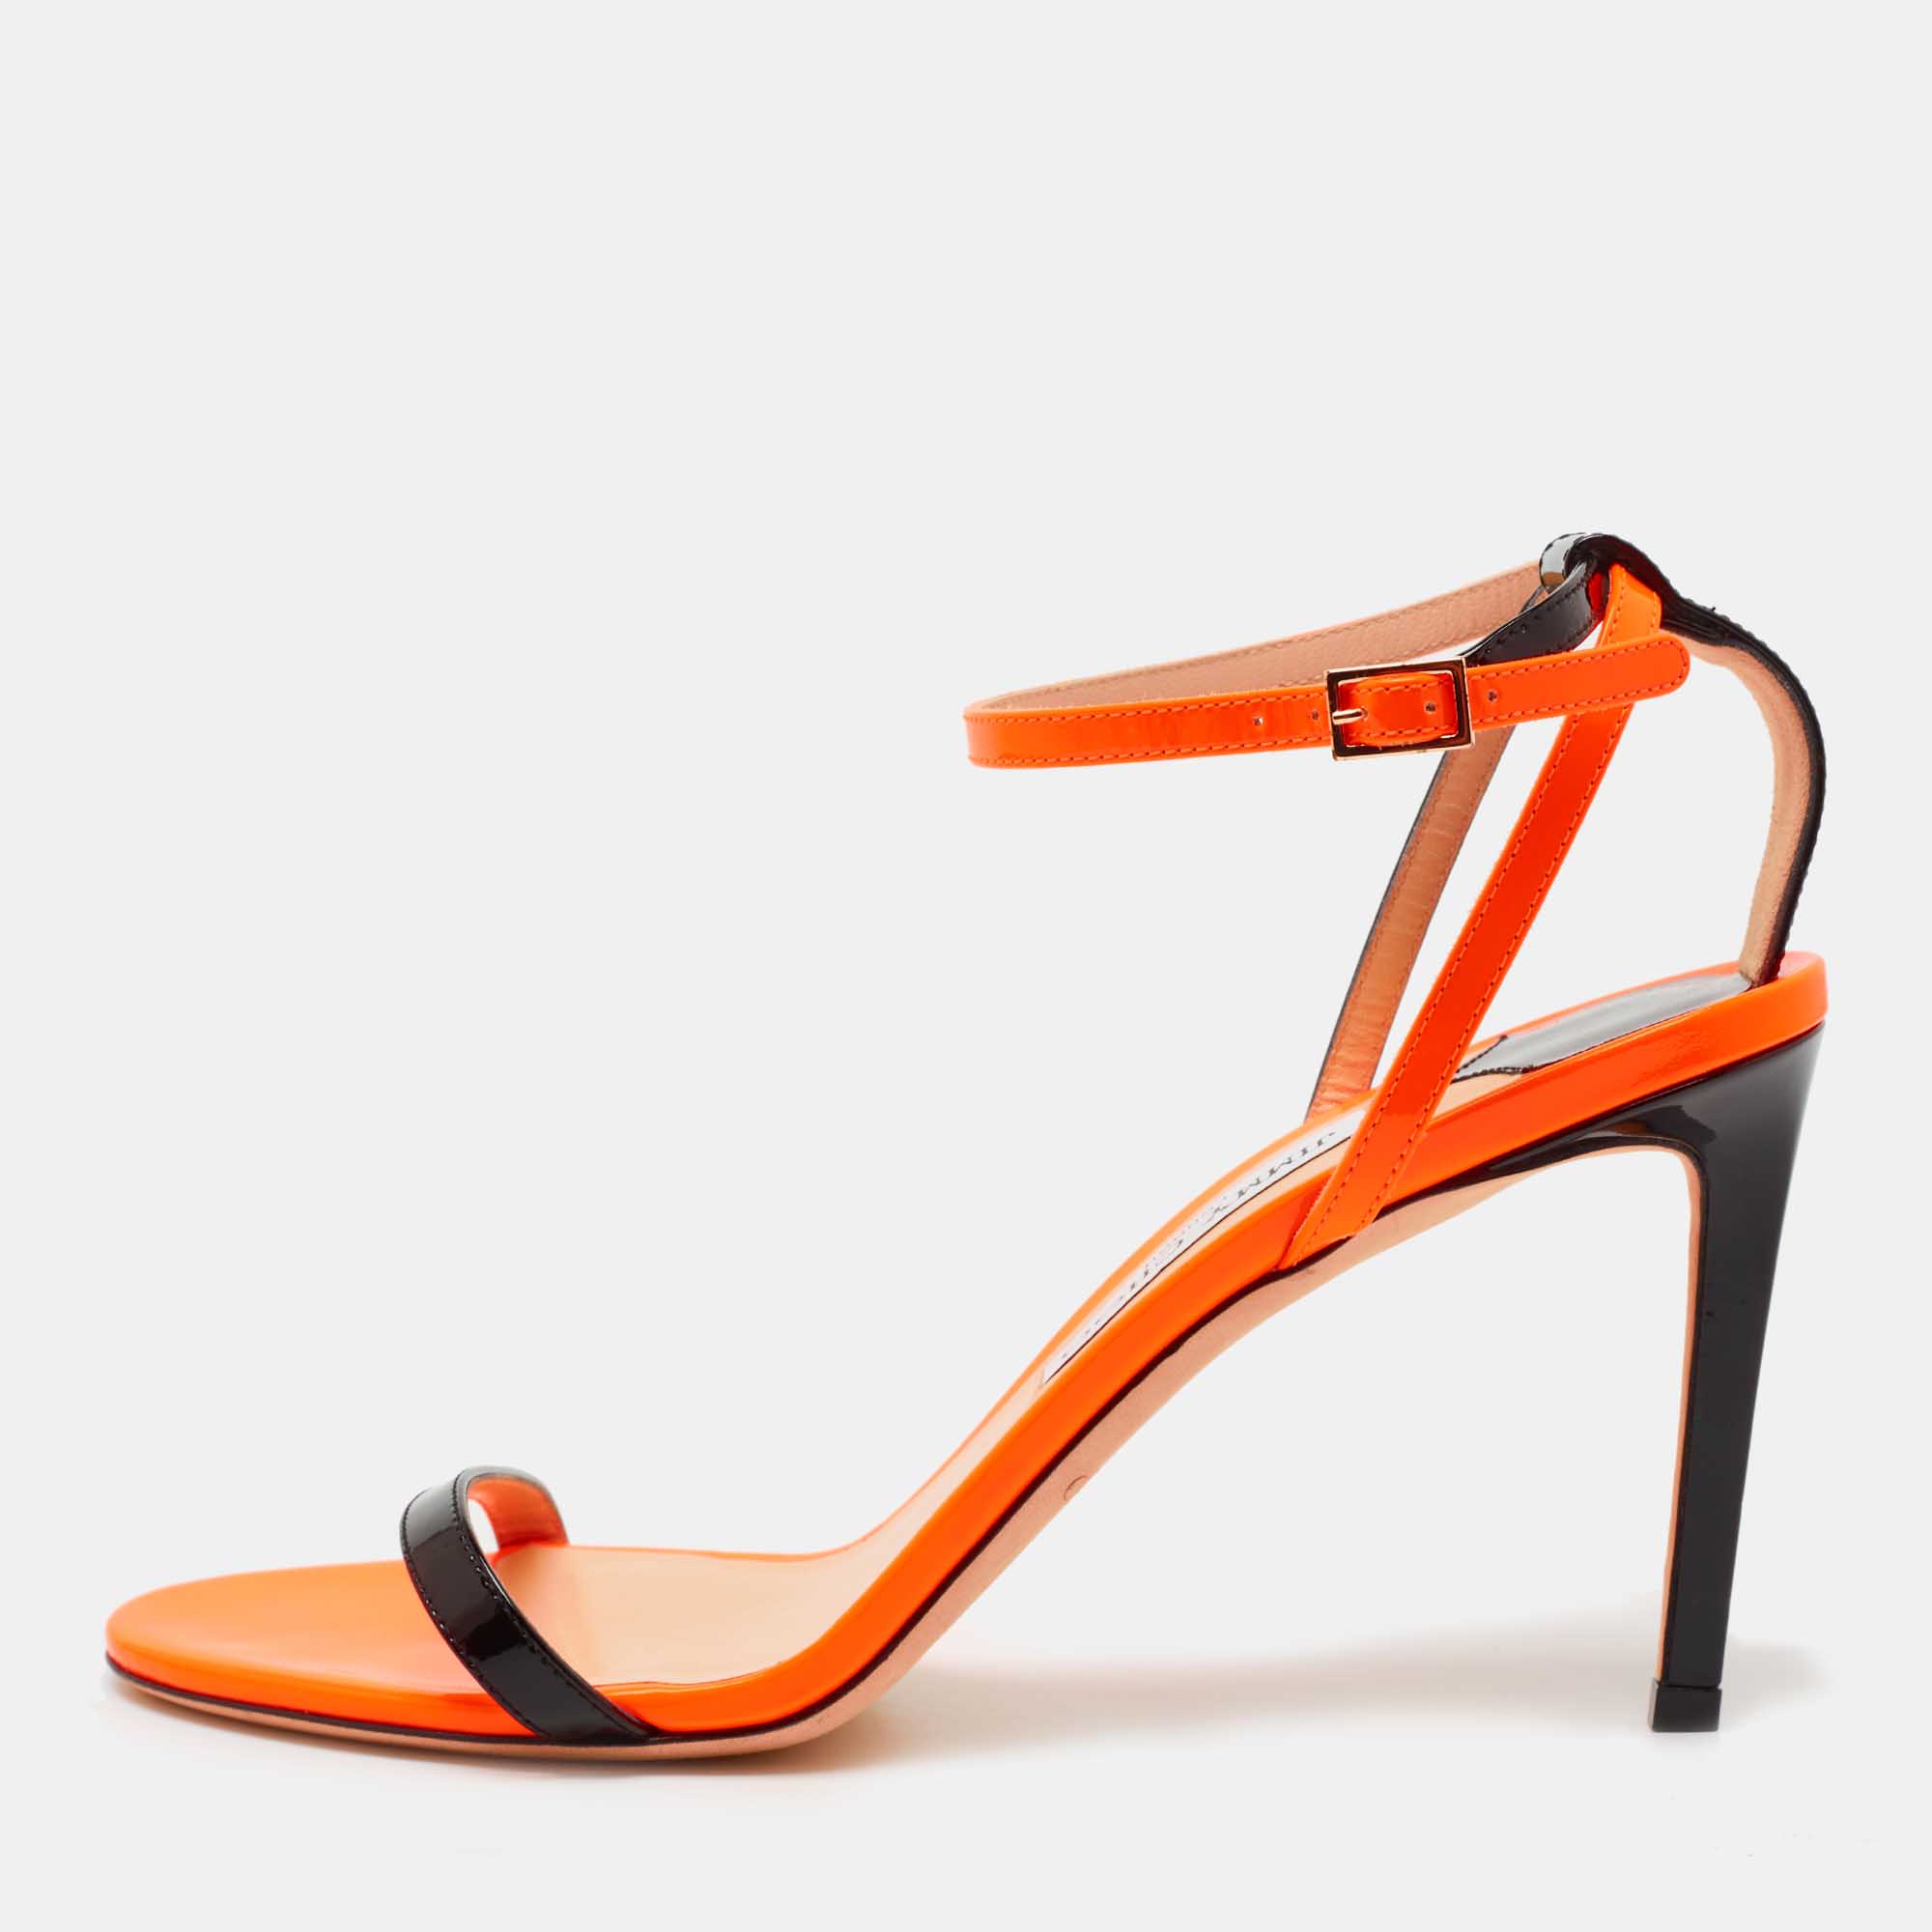 Jimmy Choo Orange/Black Patent Leather Strappy Sandals Size 40